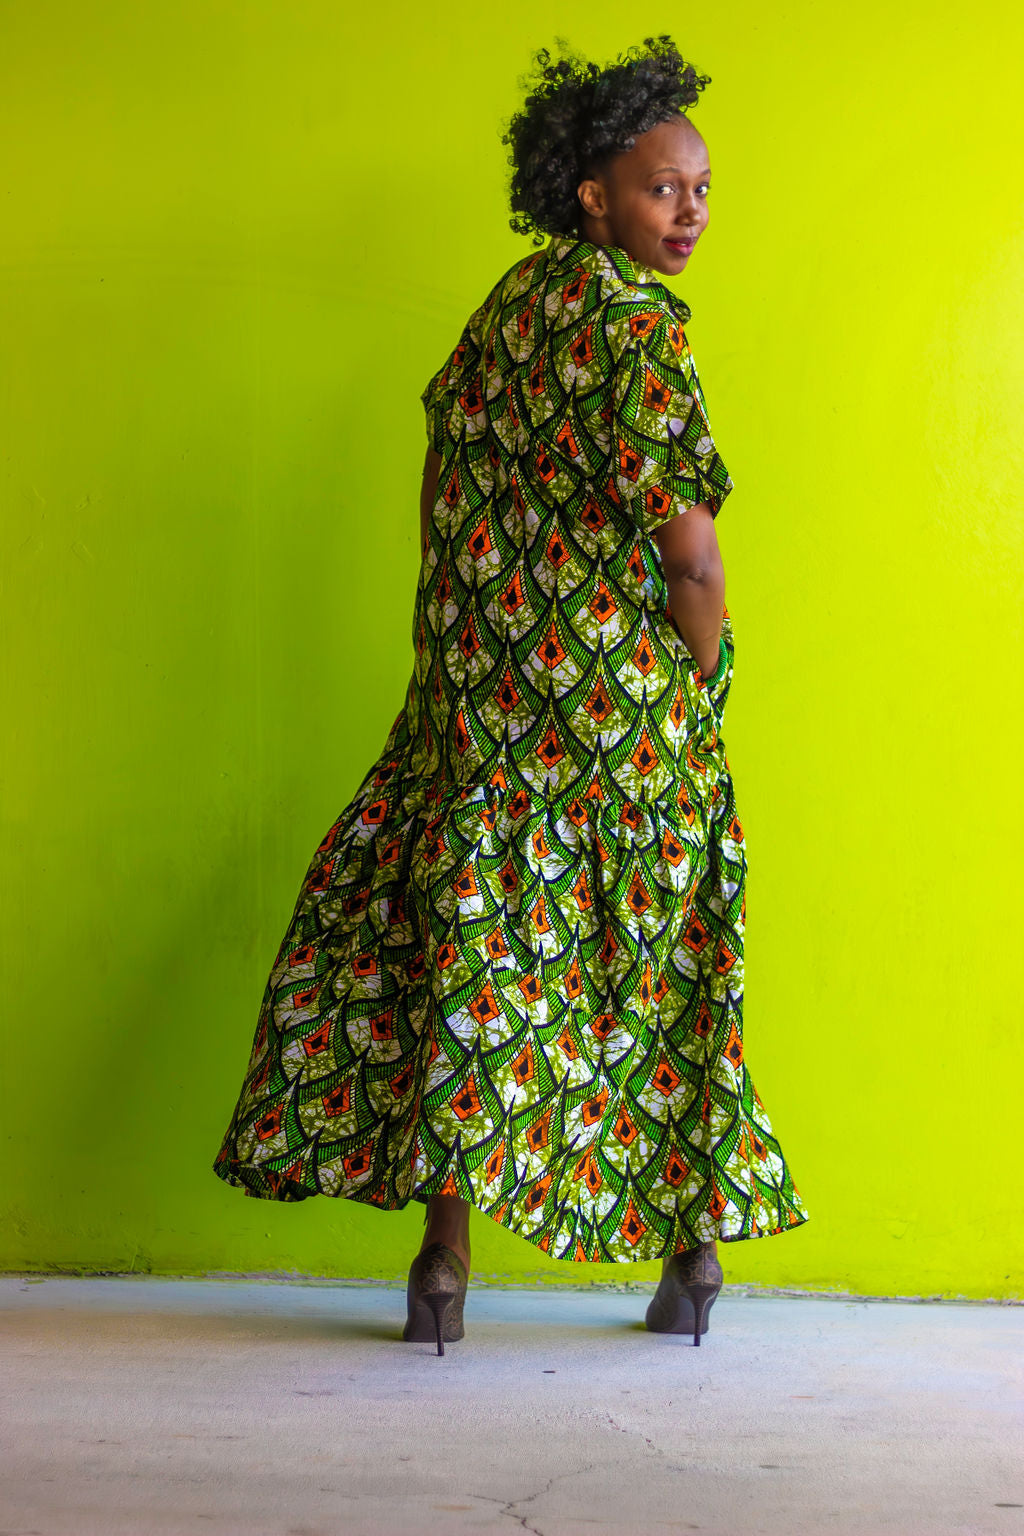 African Print /Ankara/Kitenge Maxi Dress - Lime Green /Orange/Black Tribal Print Short Sleeved Button Down Long Shirt Dress